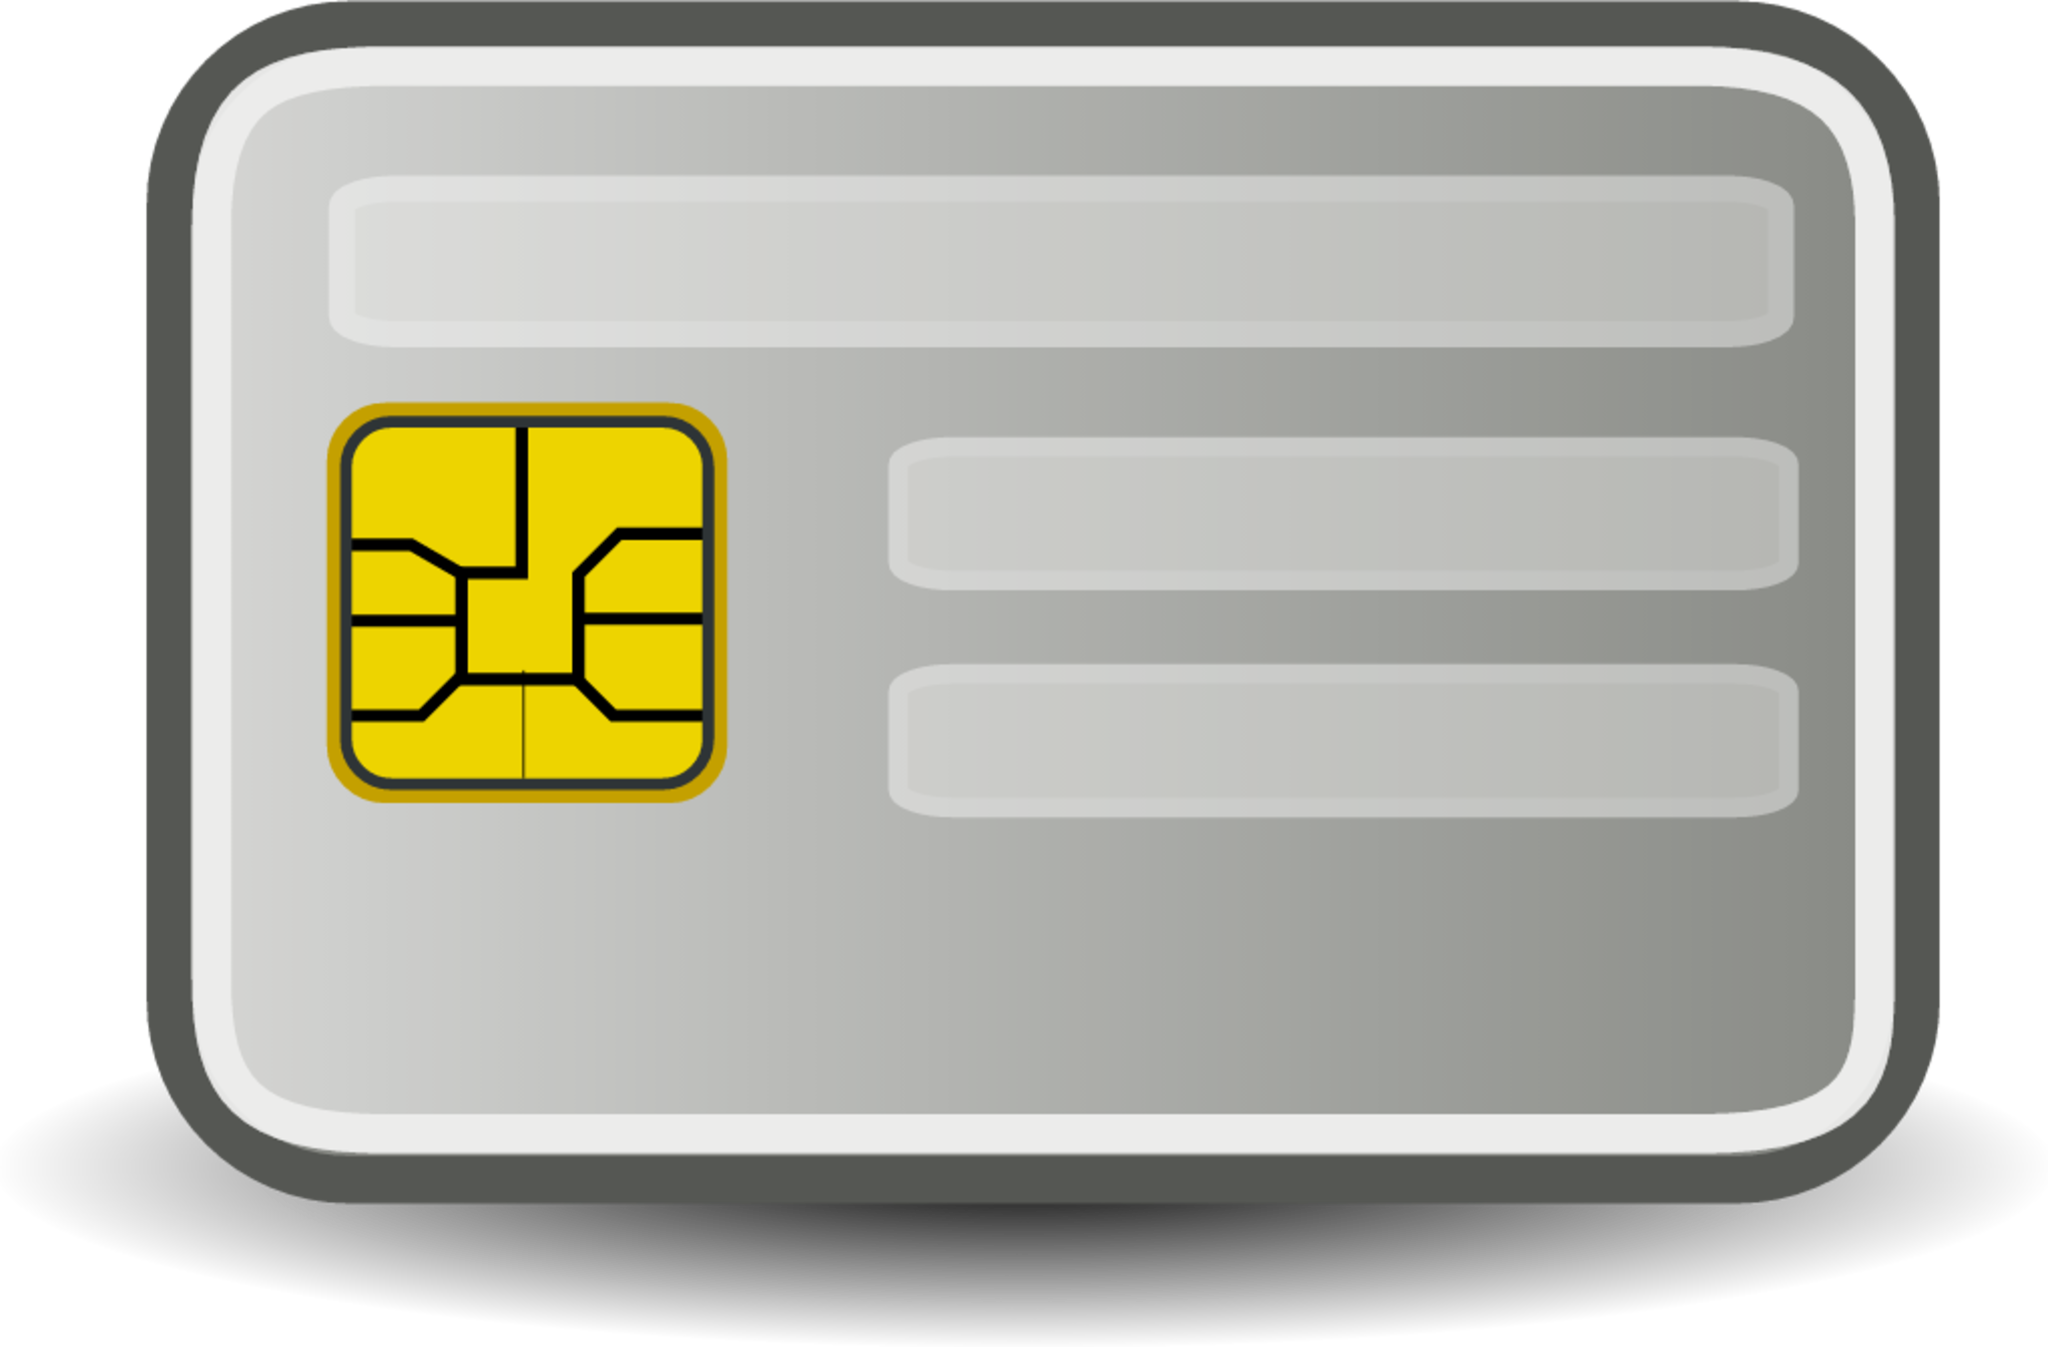 chipcard icon